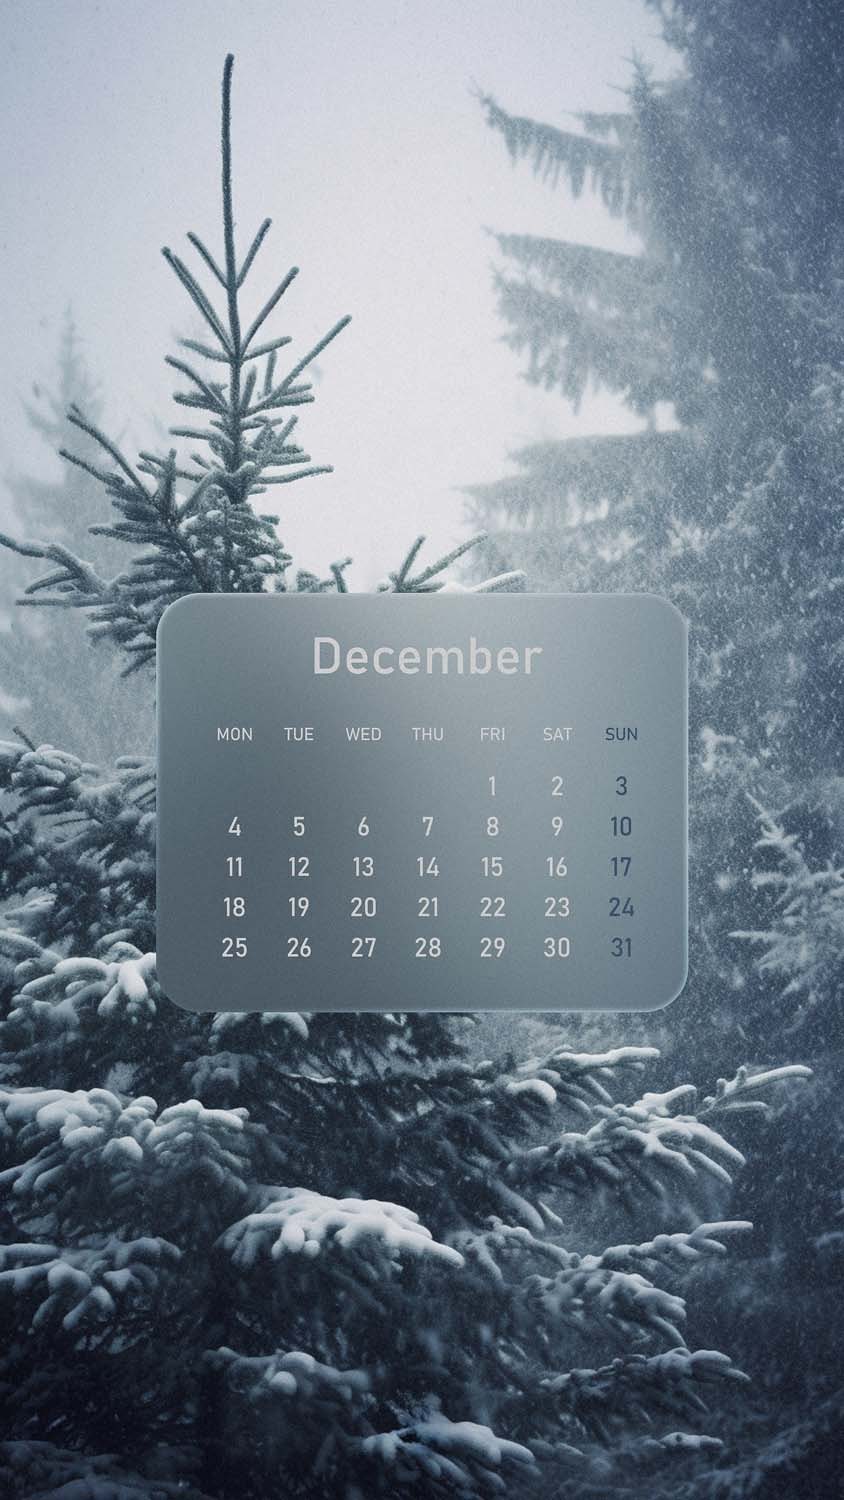 December Calendar Xmas